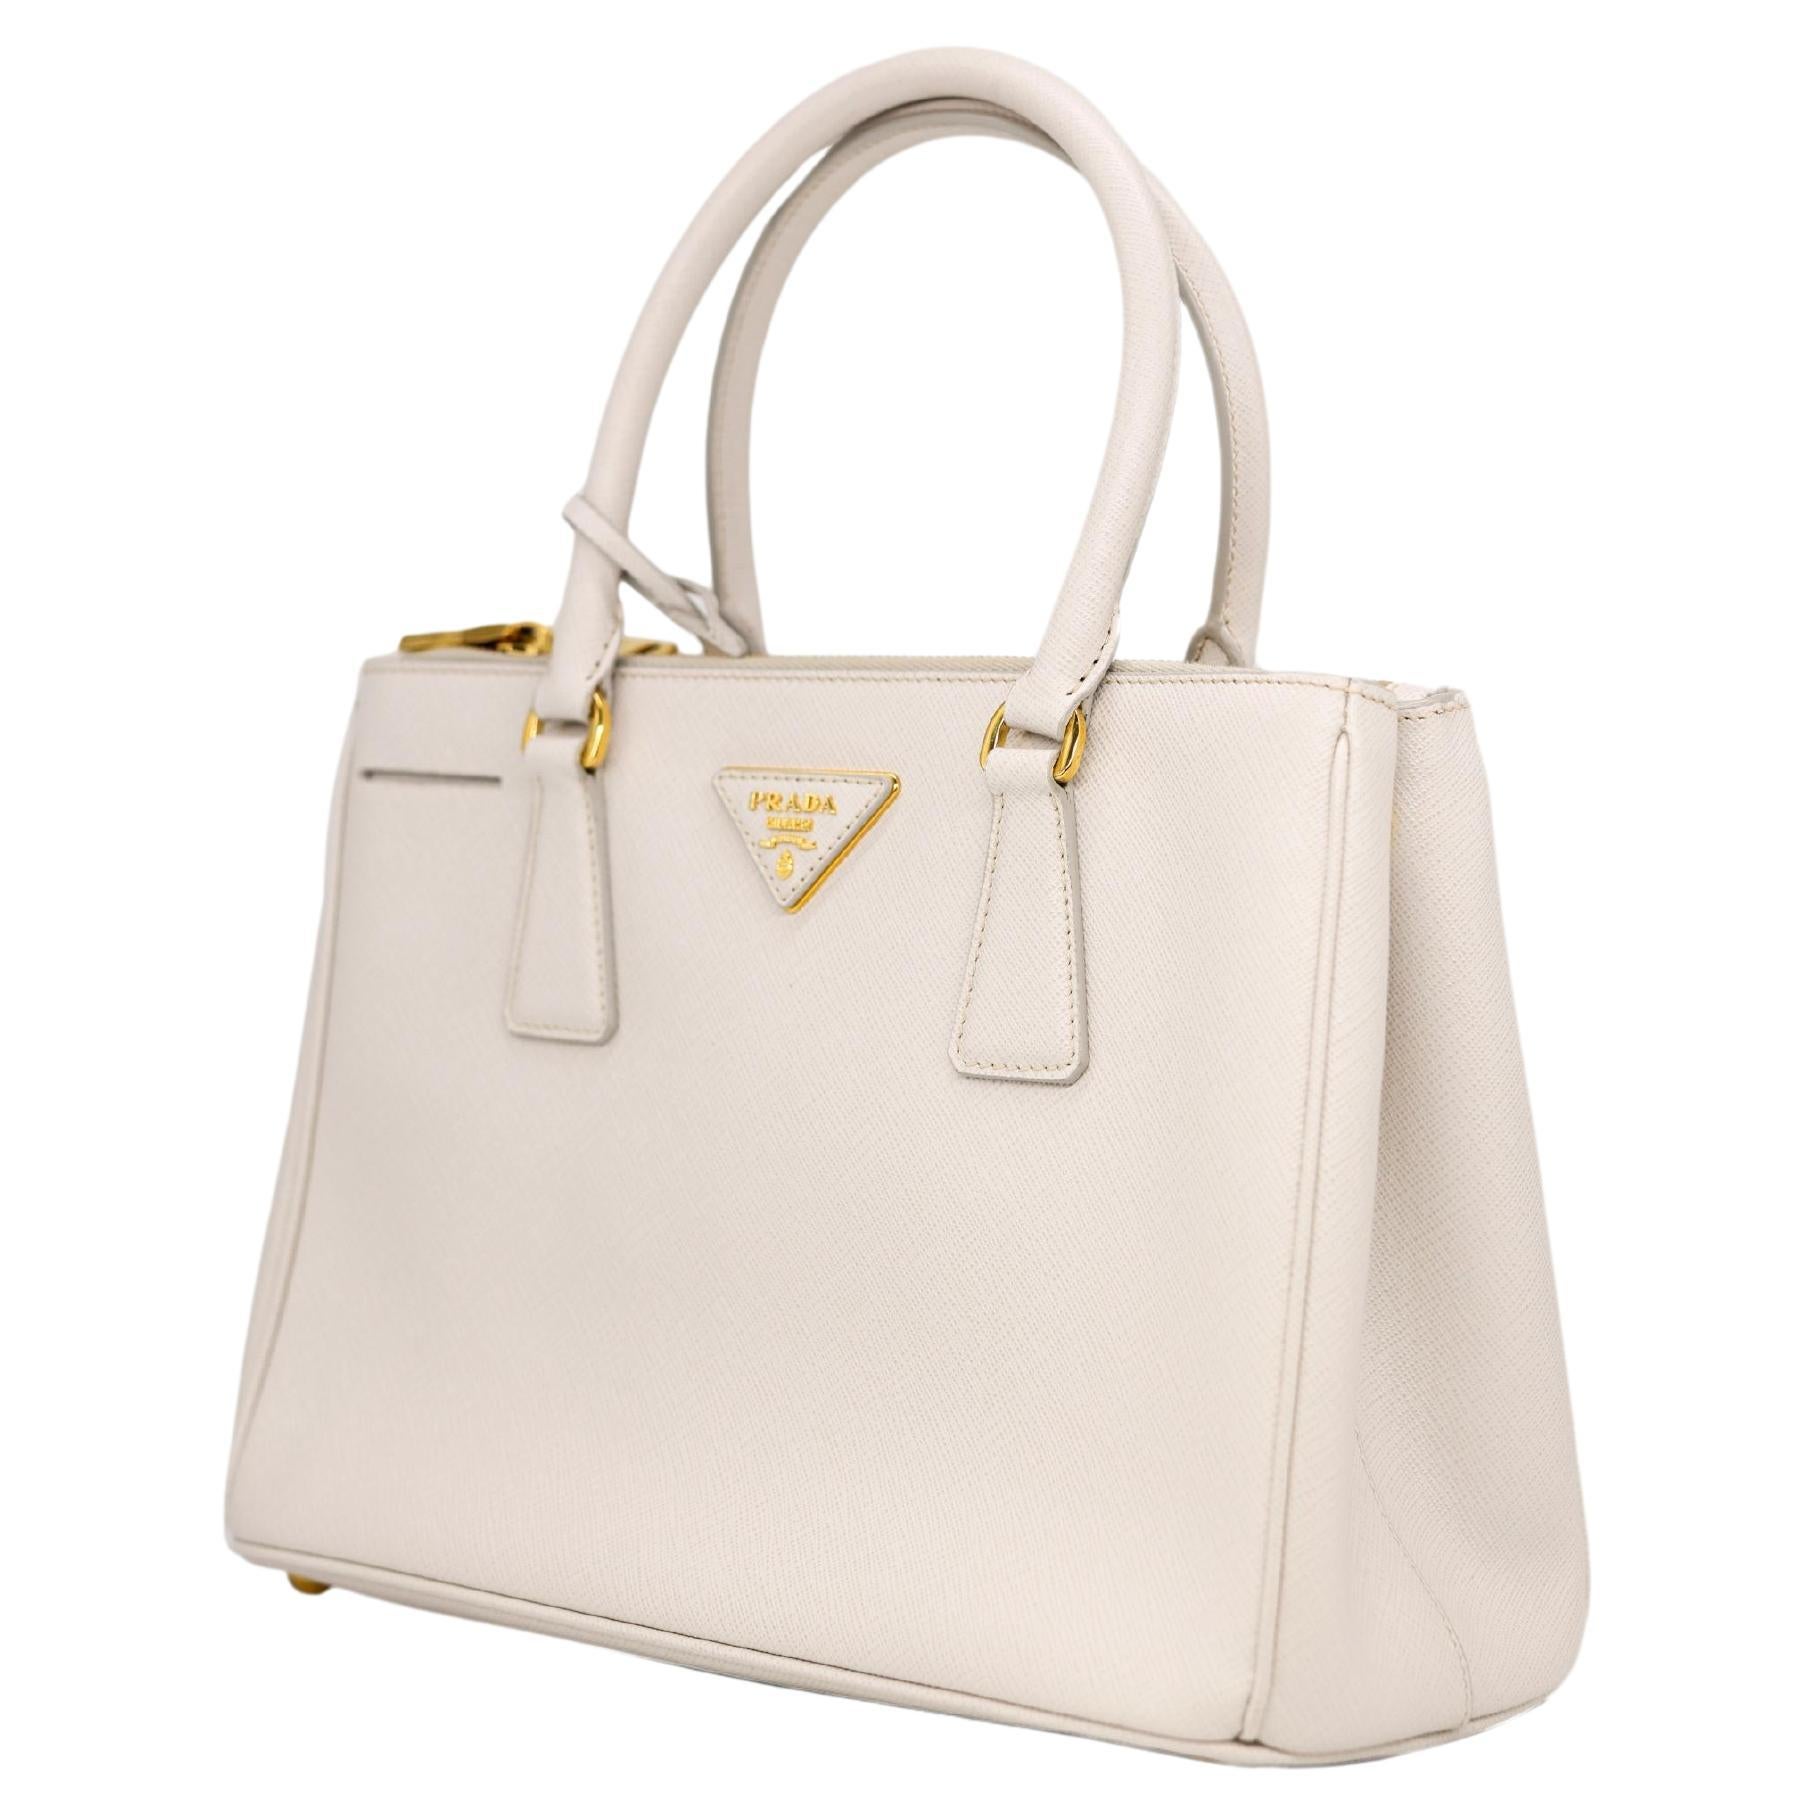 Prada White Galleria Saffiano Leather Medium Top Handle Shoulder Bag, 2020. The 